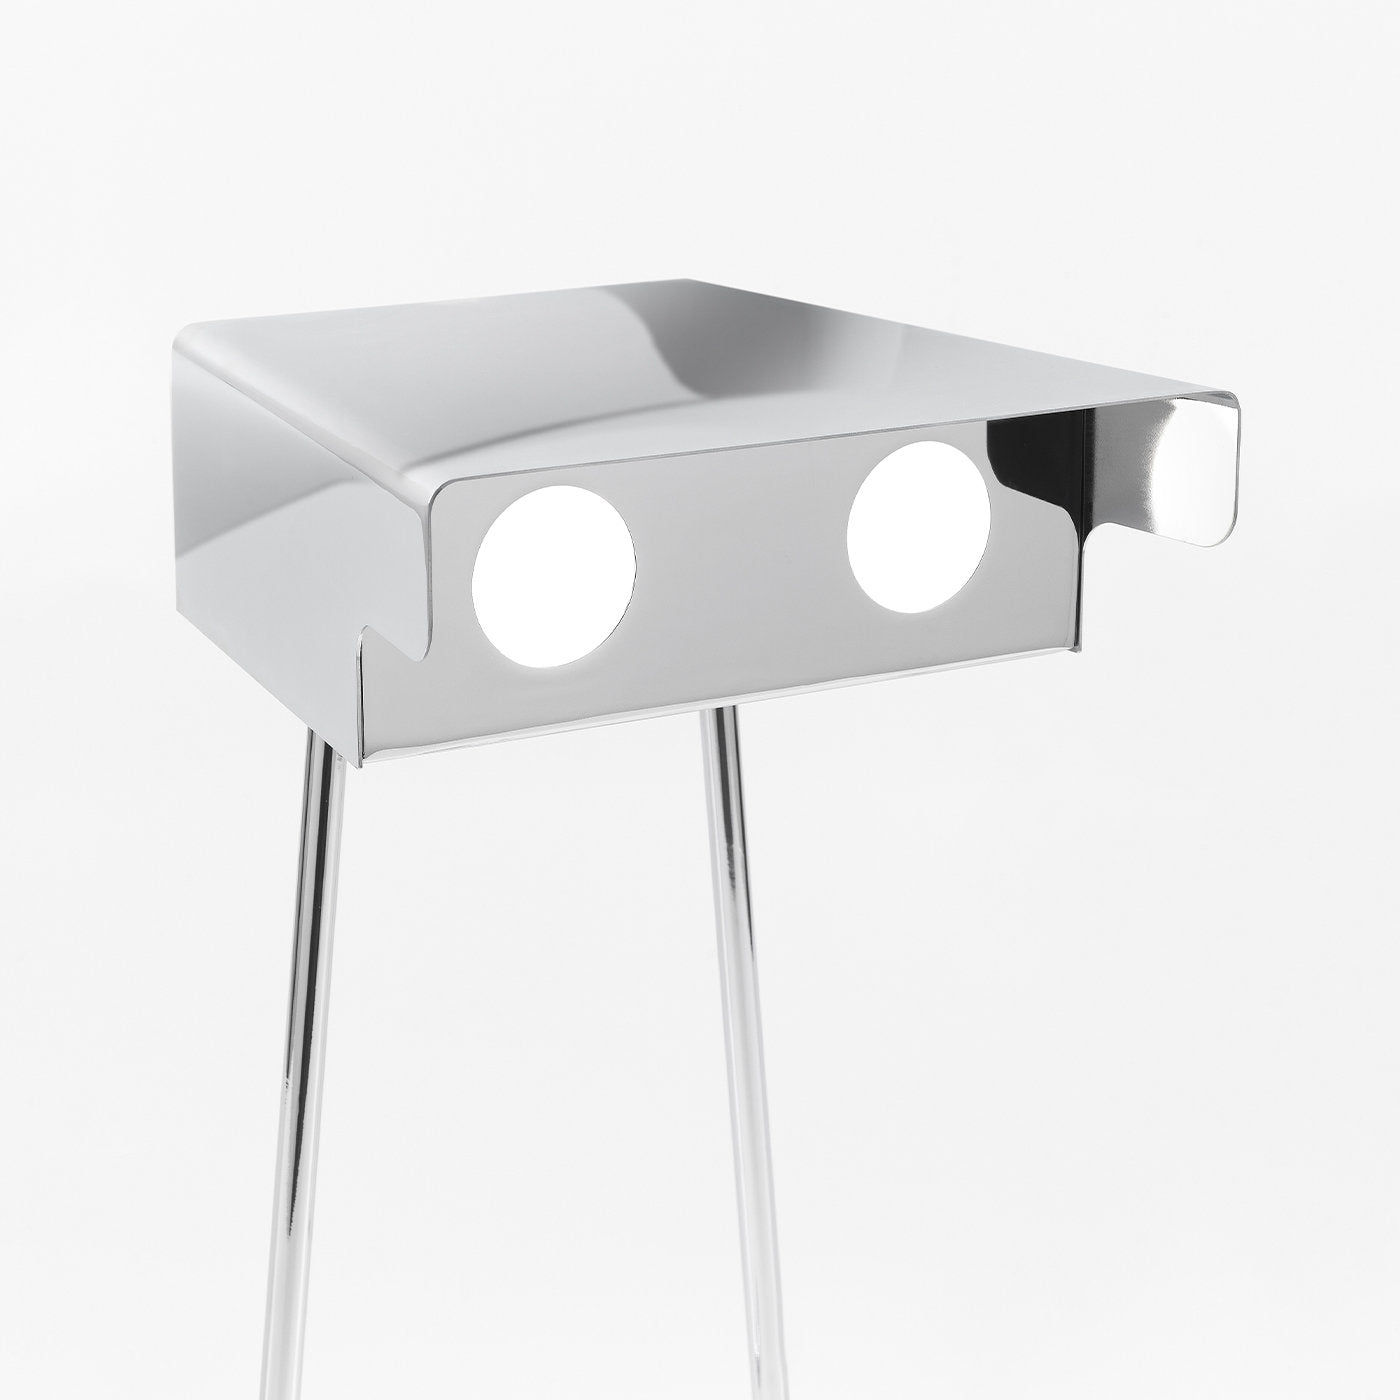 Betoo Table Lamp by Richard Hutten - Alternative view 2